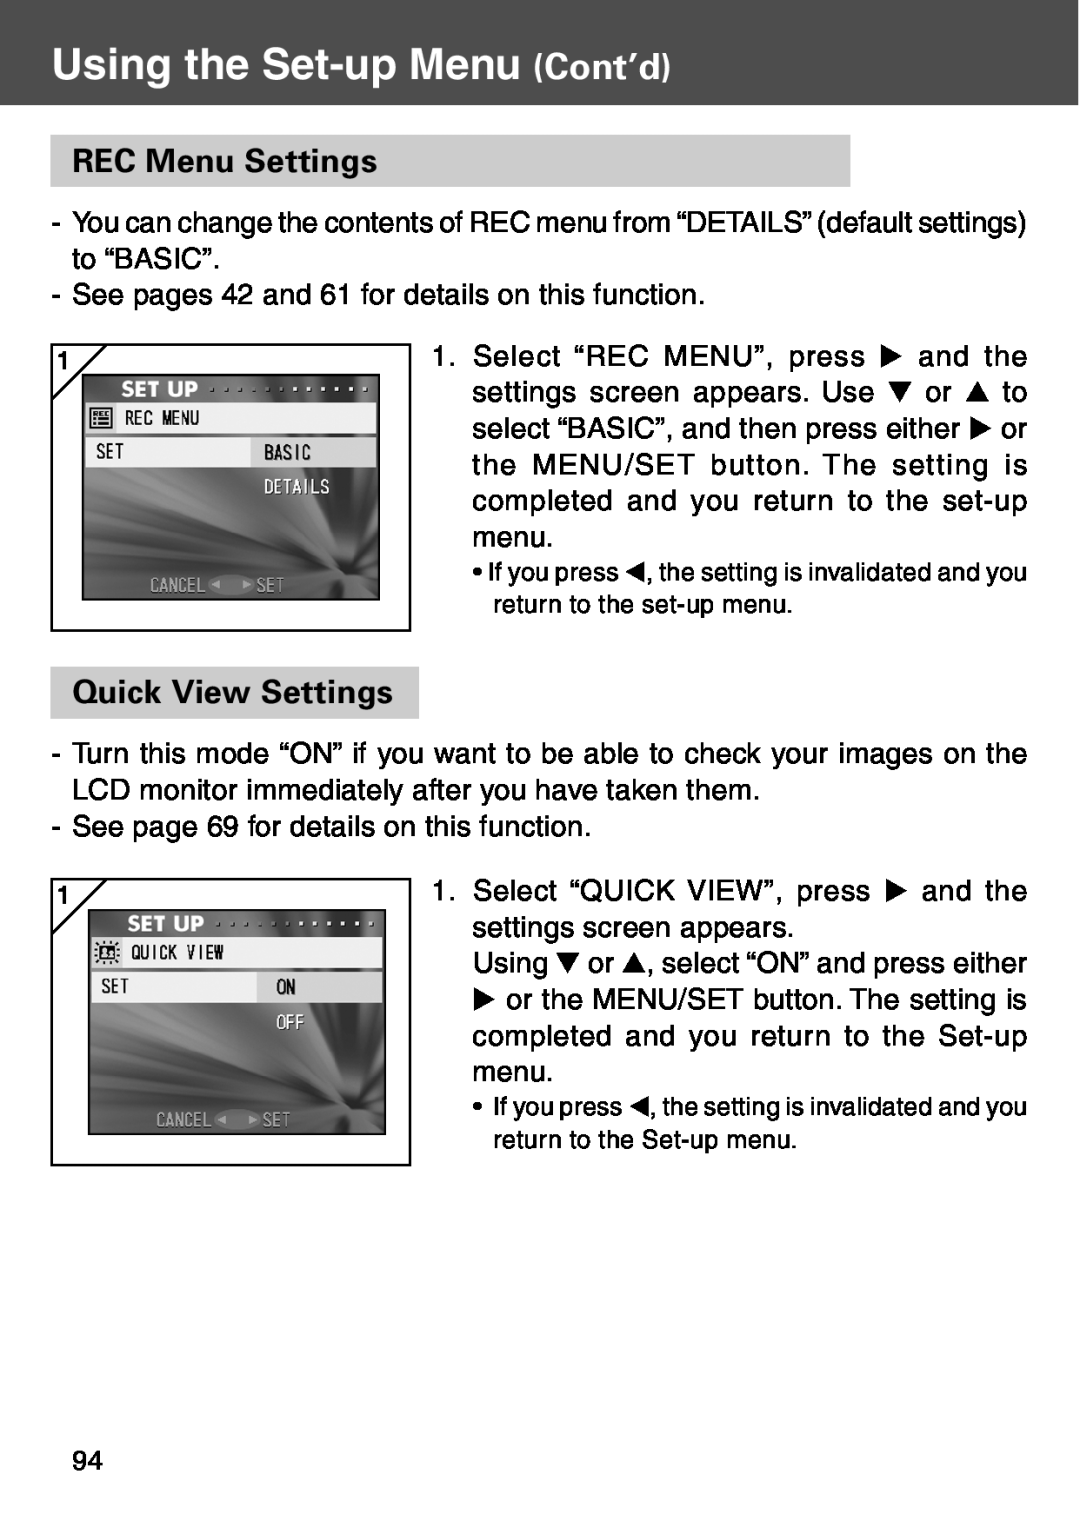 Konica Minolta KD-500Z user manual REC Menu Settings, Quick View Settings, Using the Set-up Menu Cont’d 